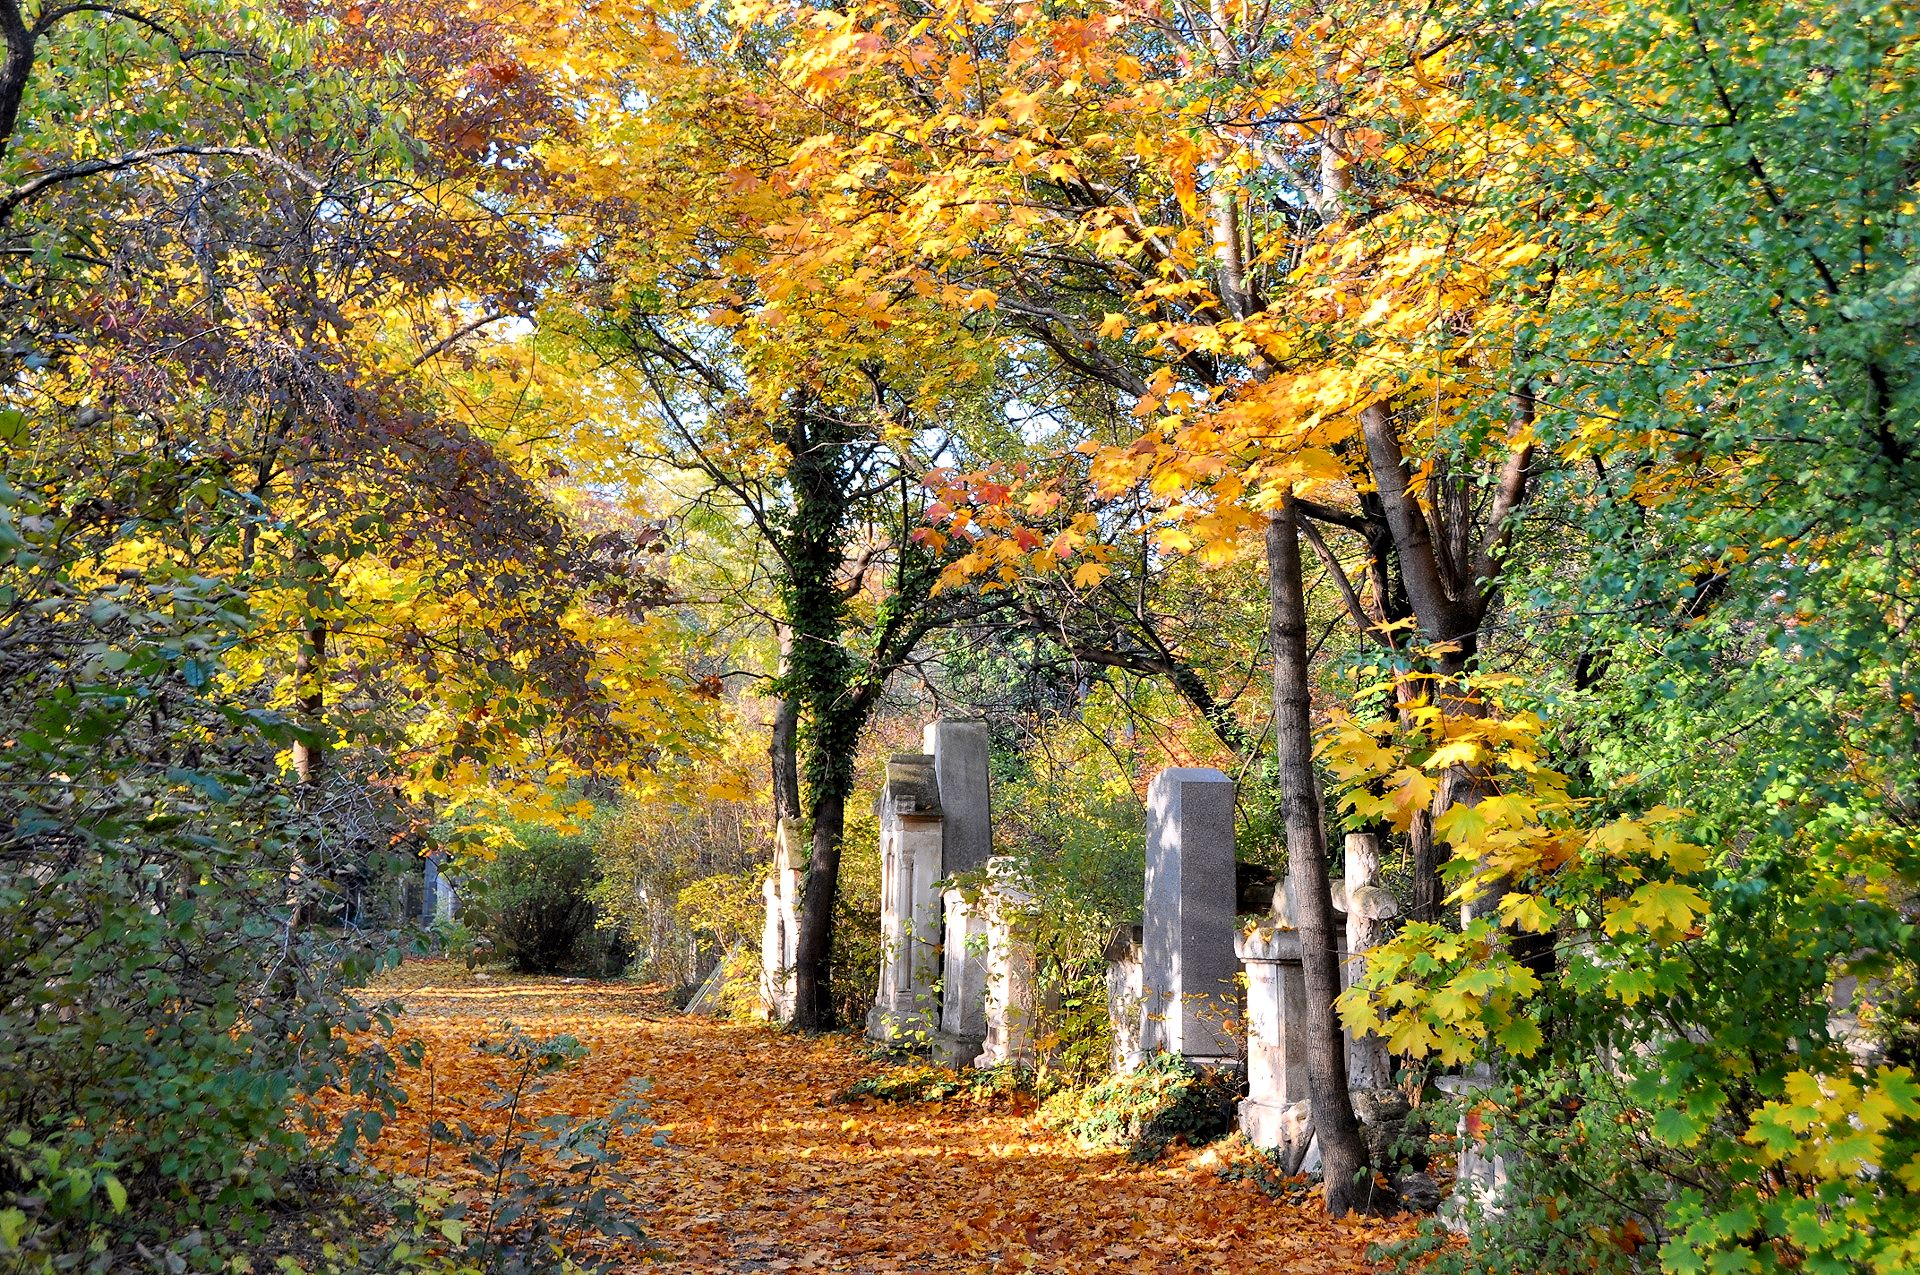 Friedhof St. Marx im Herbst